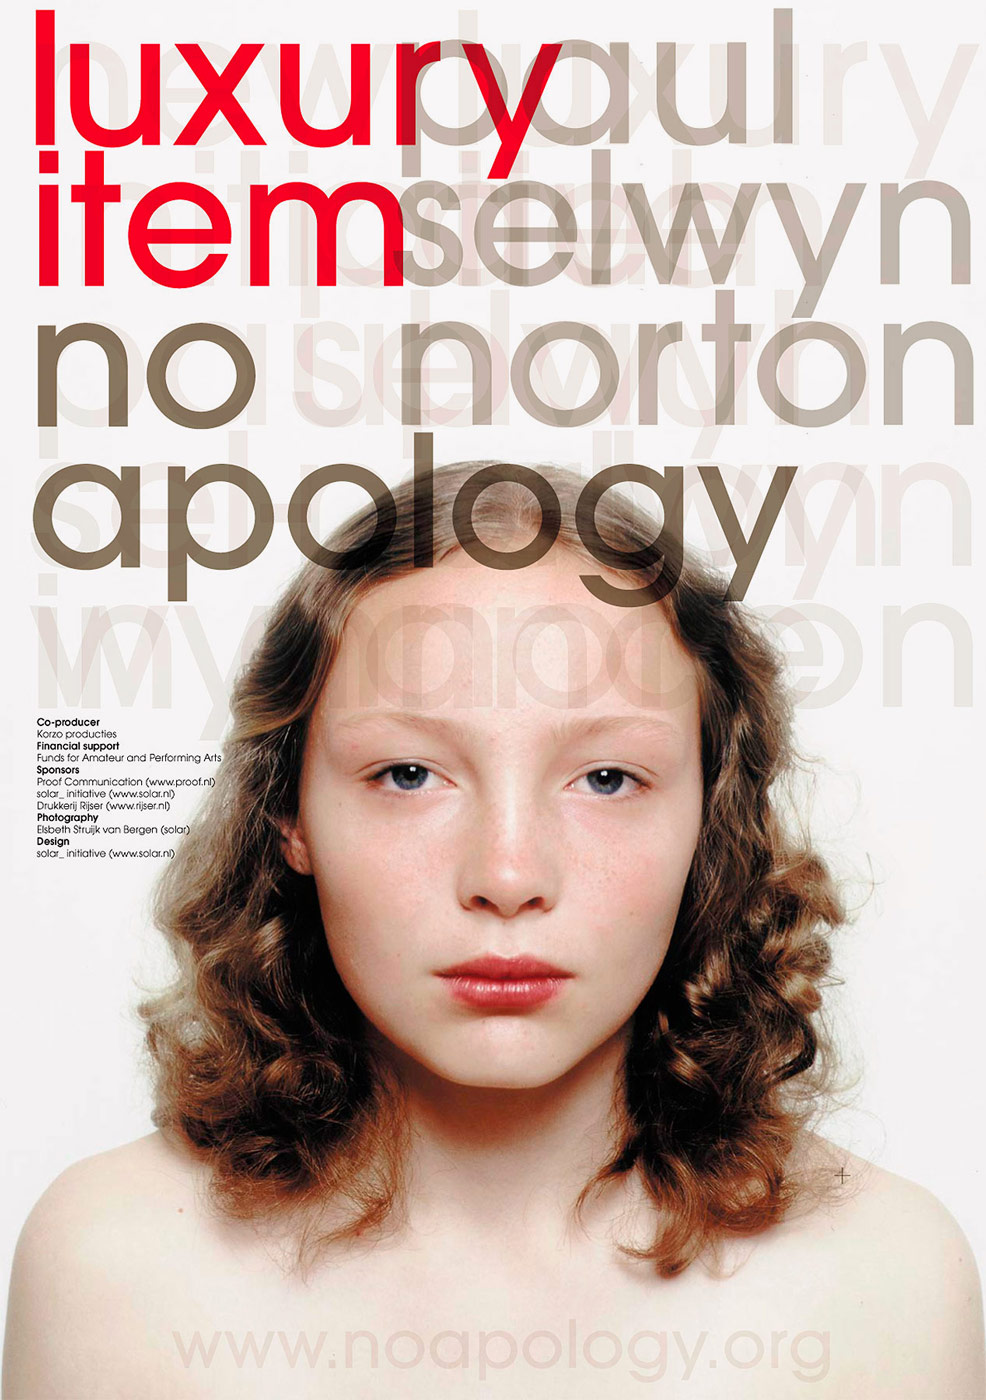 poster, typography, branding, paul selwyn norton